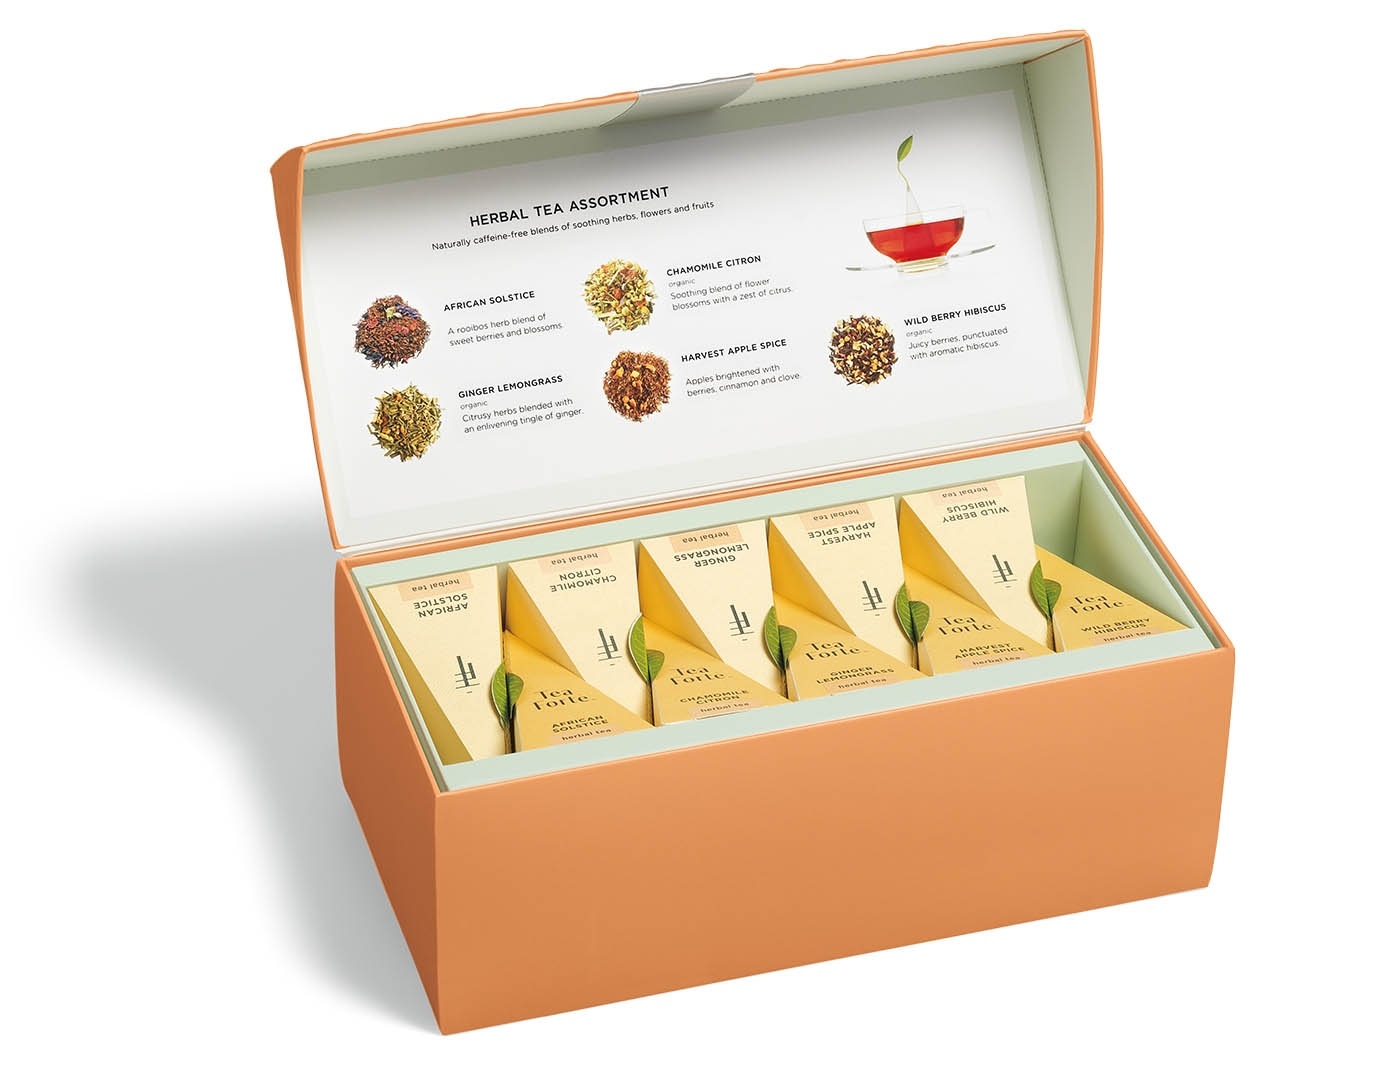 Tea forte Herbal Tea Assortment Presentation Box